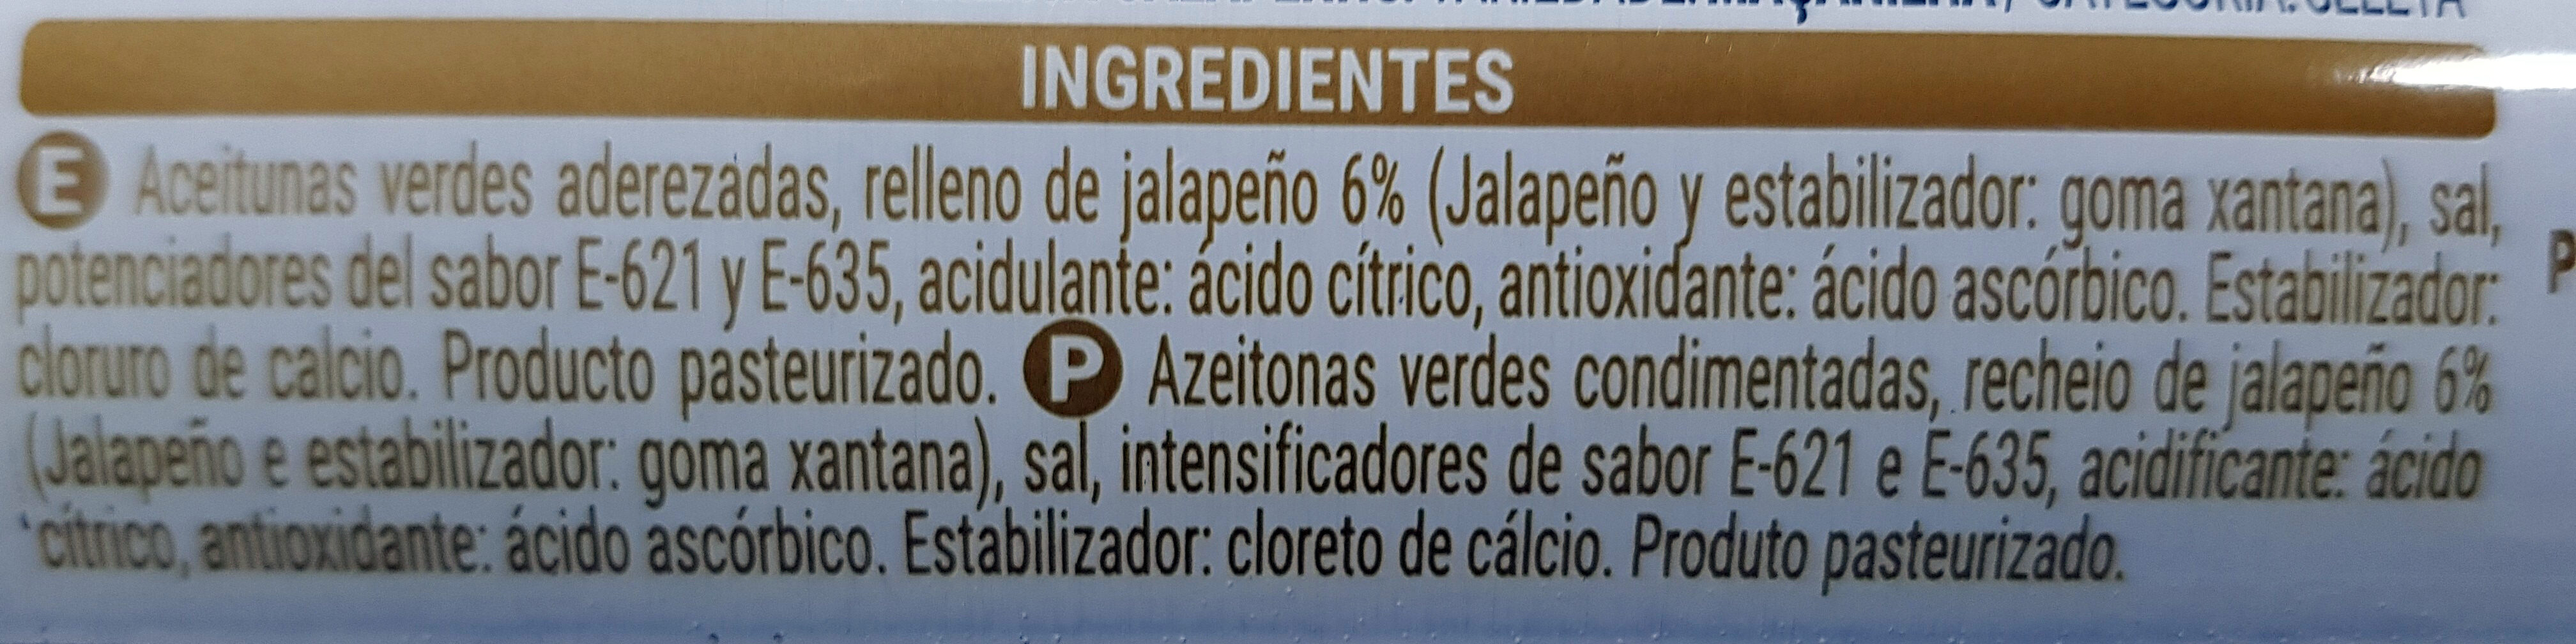 Aceitunas verdes rellenas de jalapeño - Ingredientes